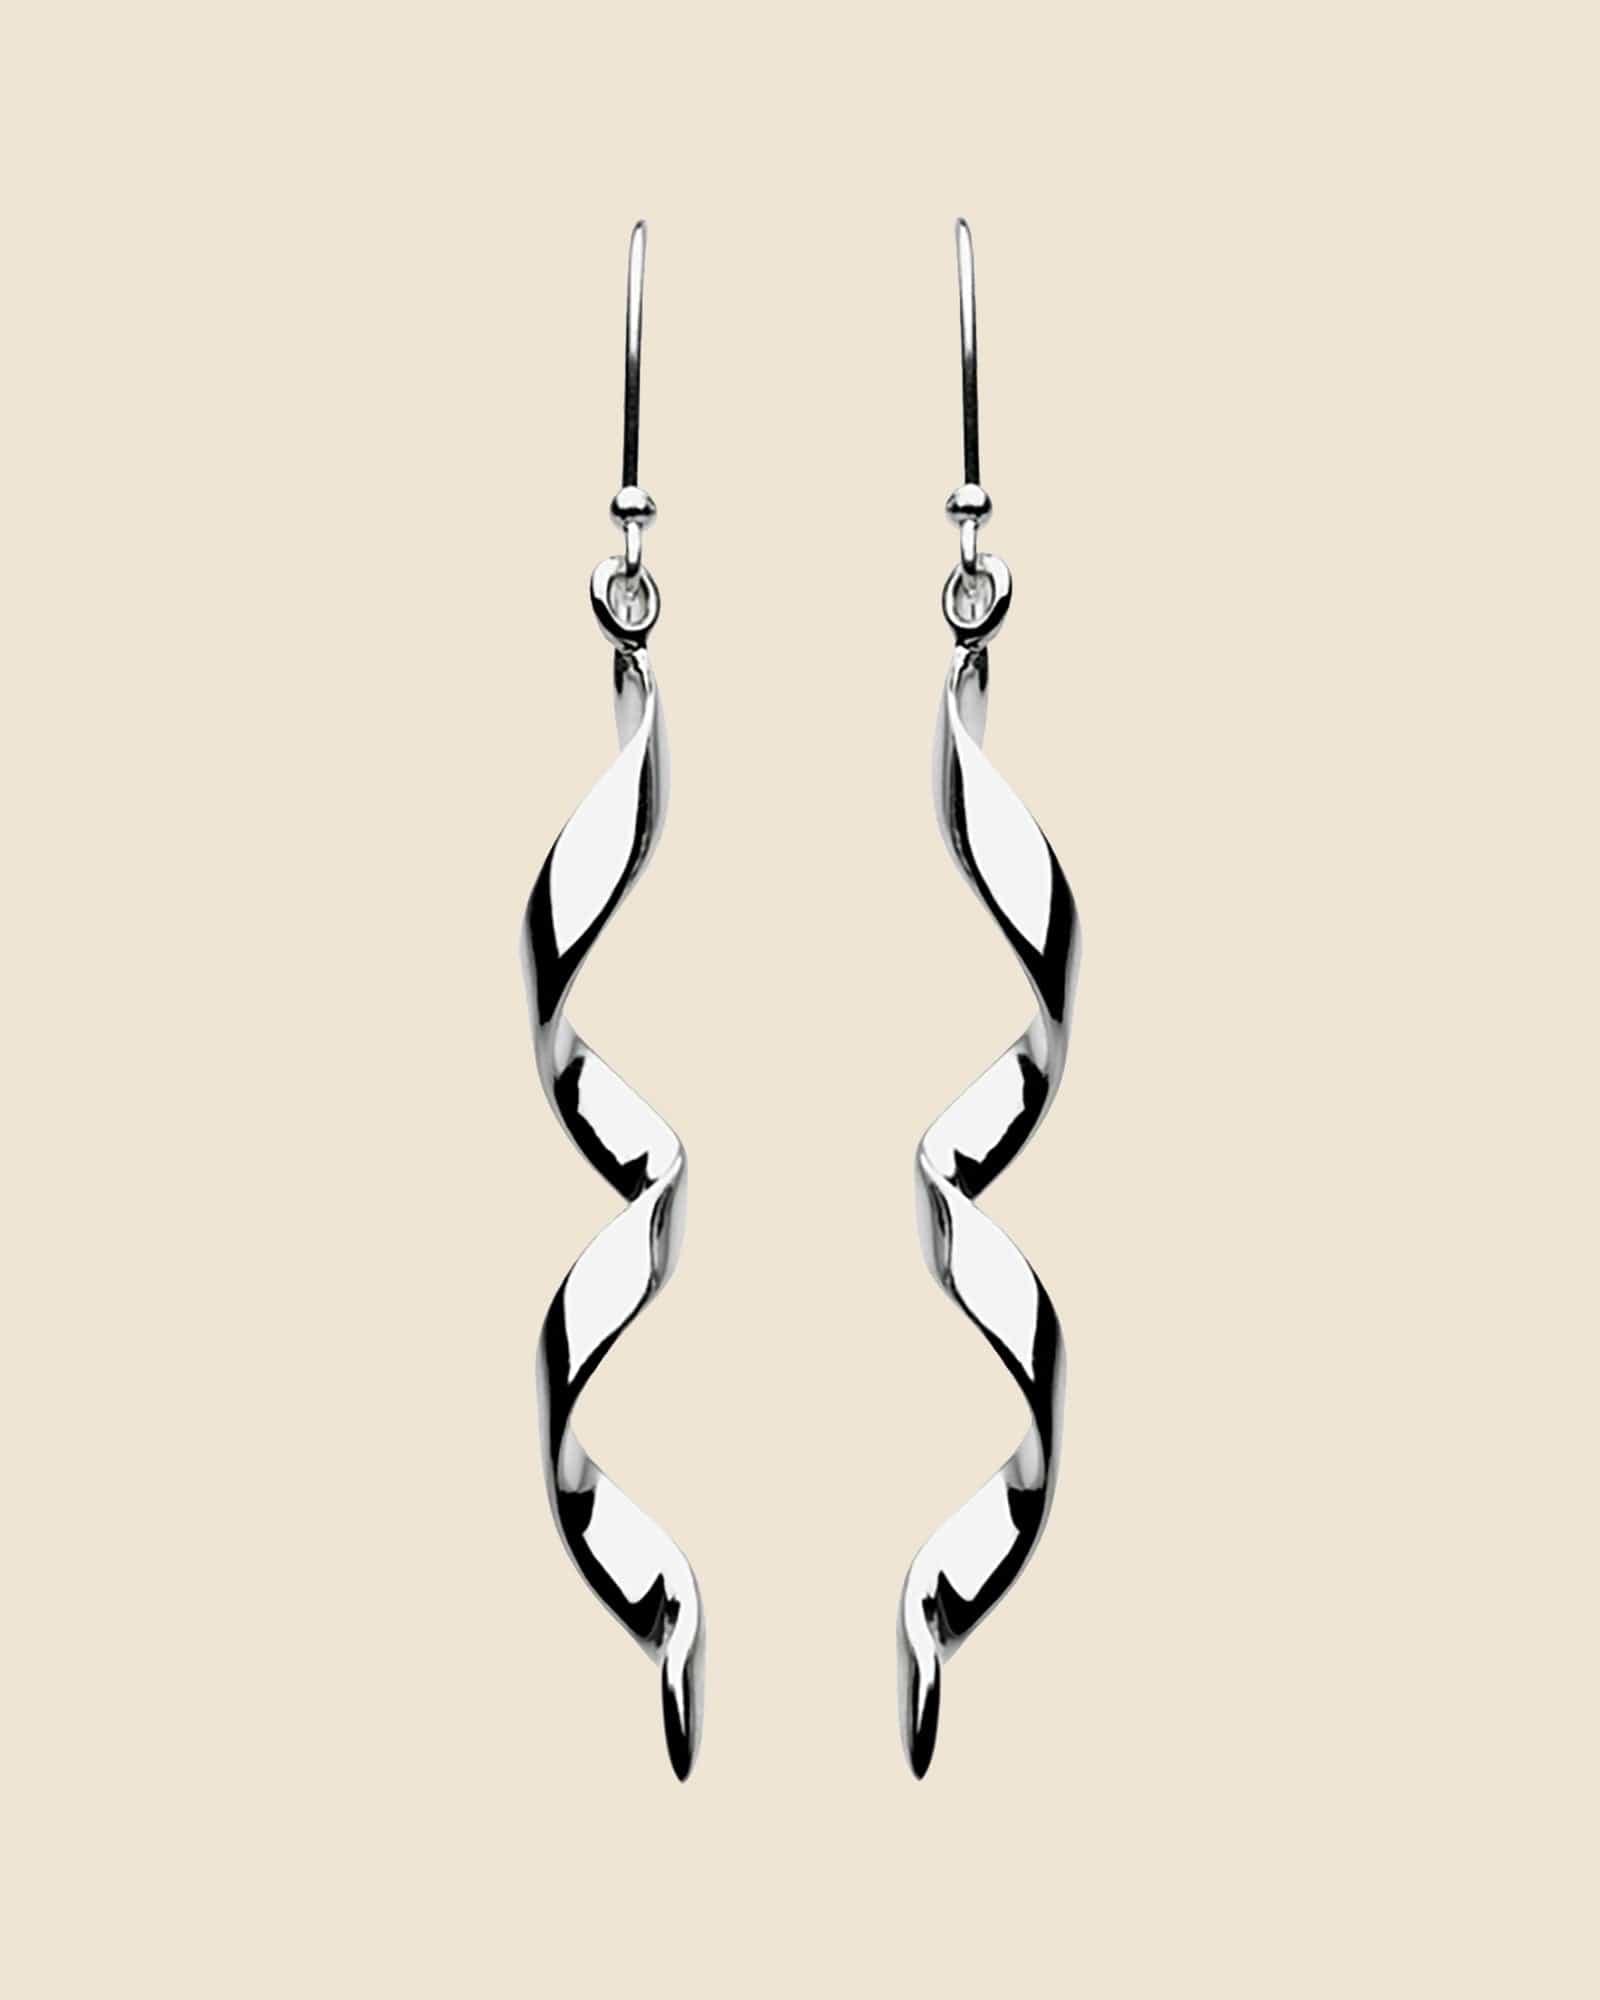 Sterling Silver Spiral Earrings